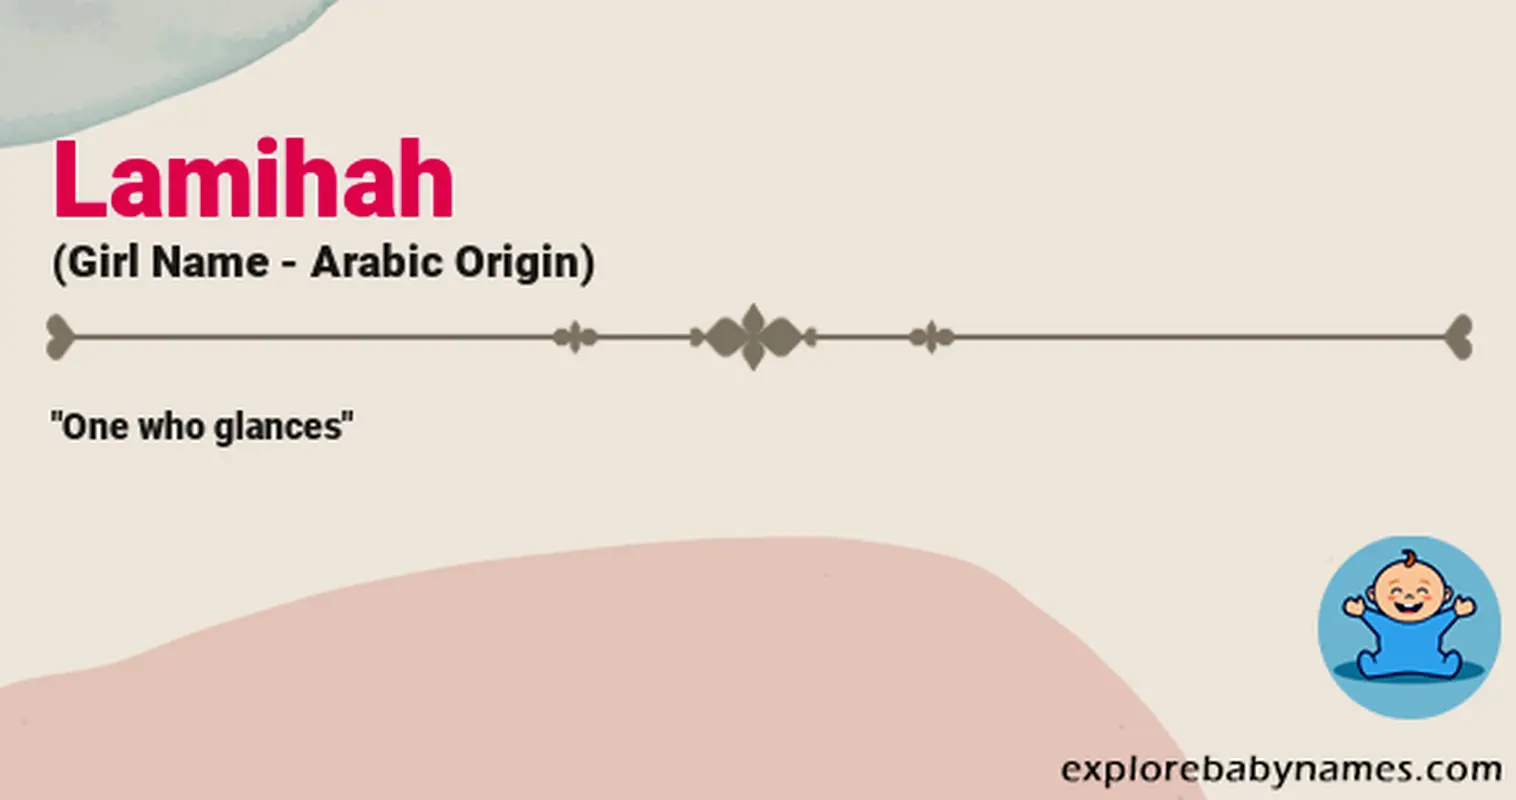 Meaning of Lamihah